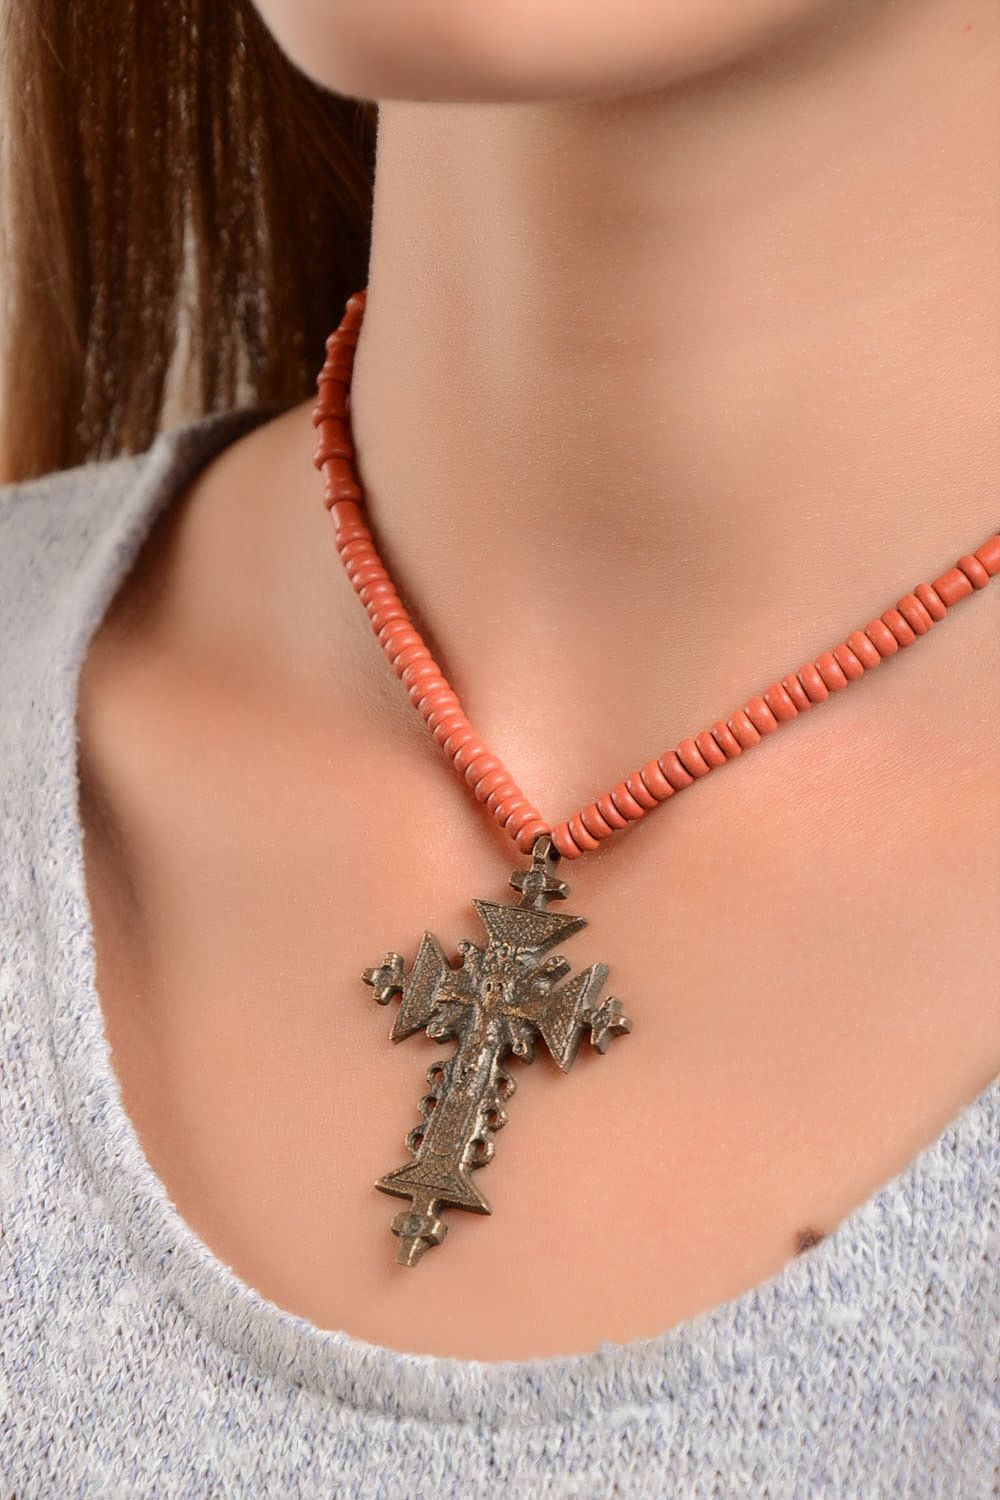 Ethnic jewelry cross necklace pendant necklace ceramic beaded necklace photo 1